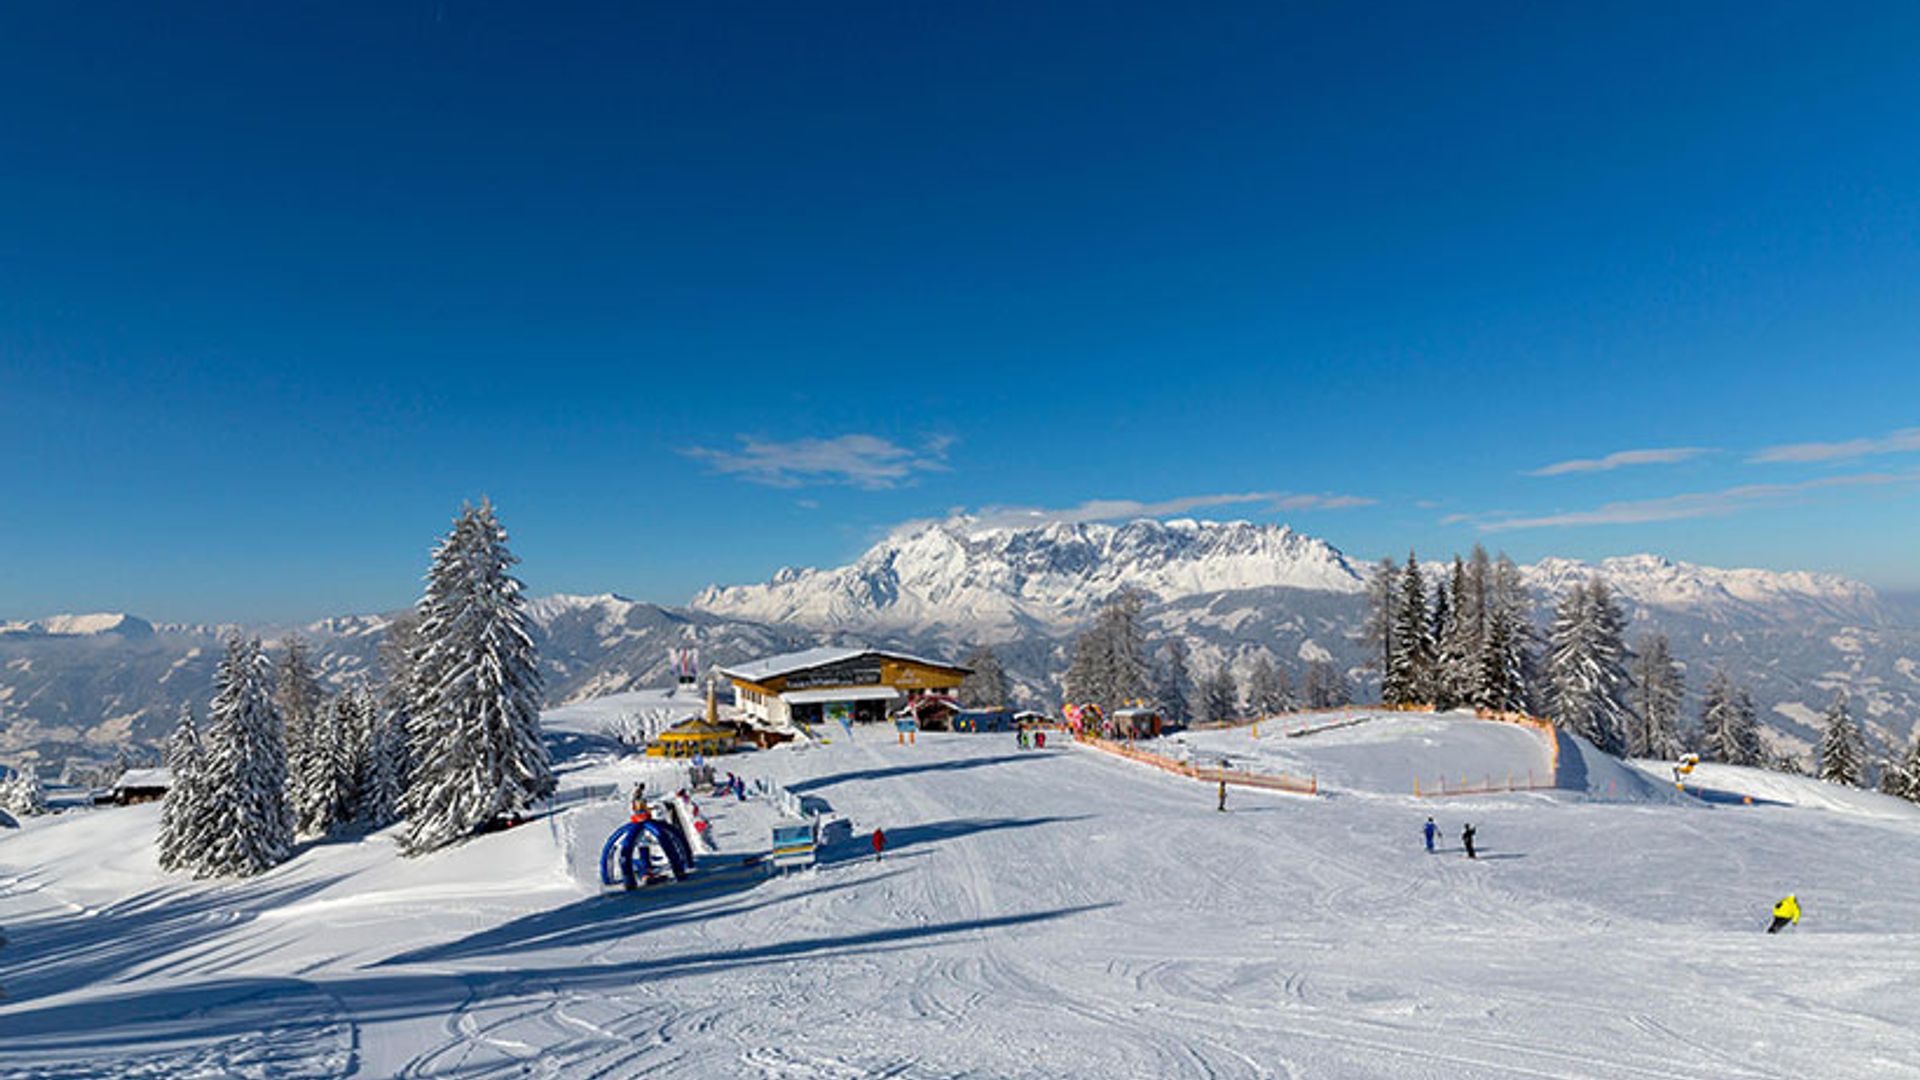 Sankt-Johann, Austria: What to do on a 3 day ski break